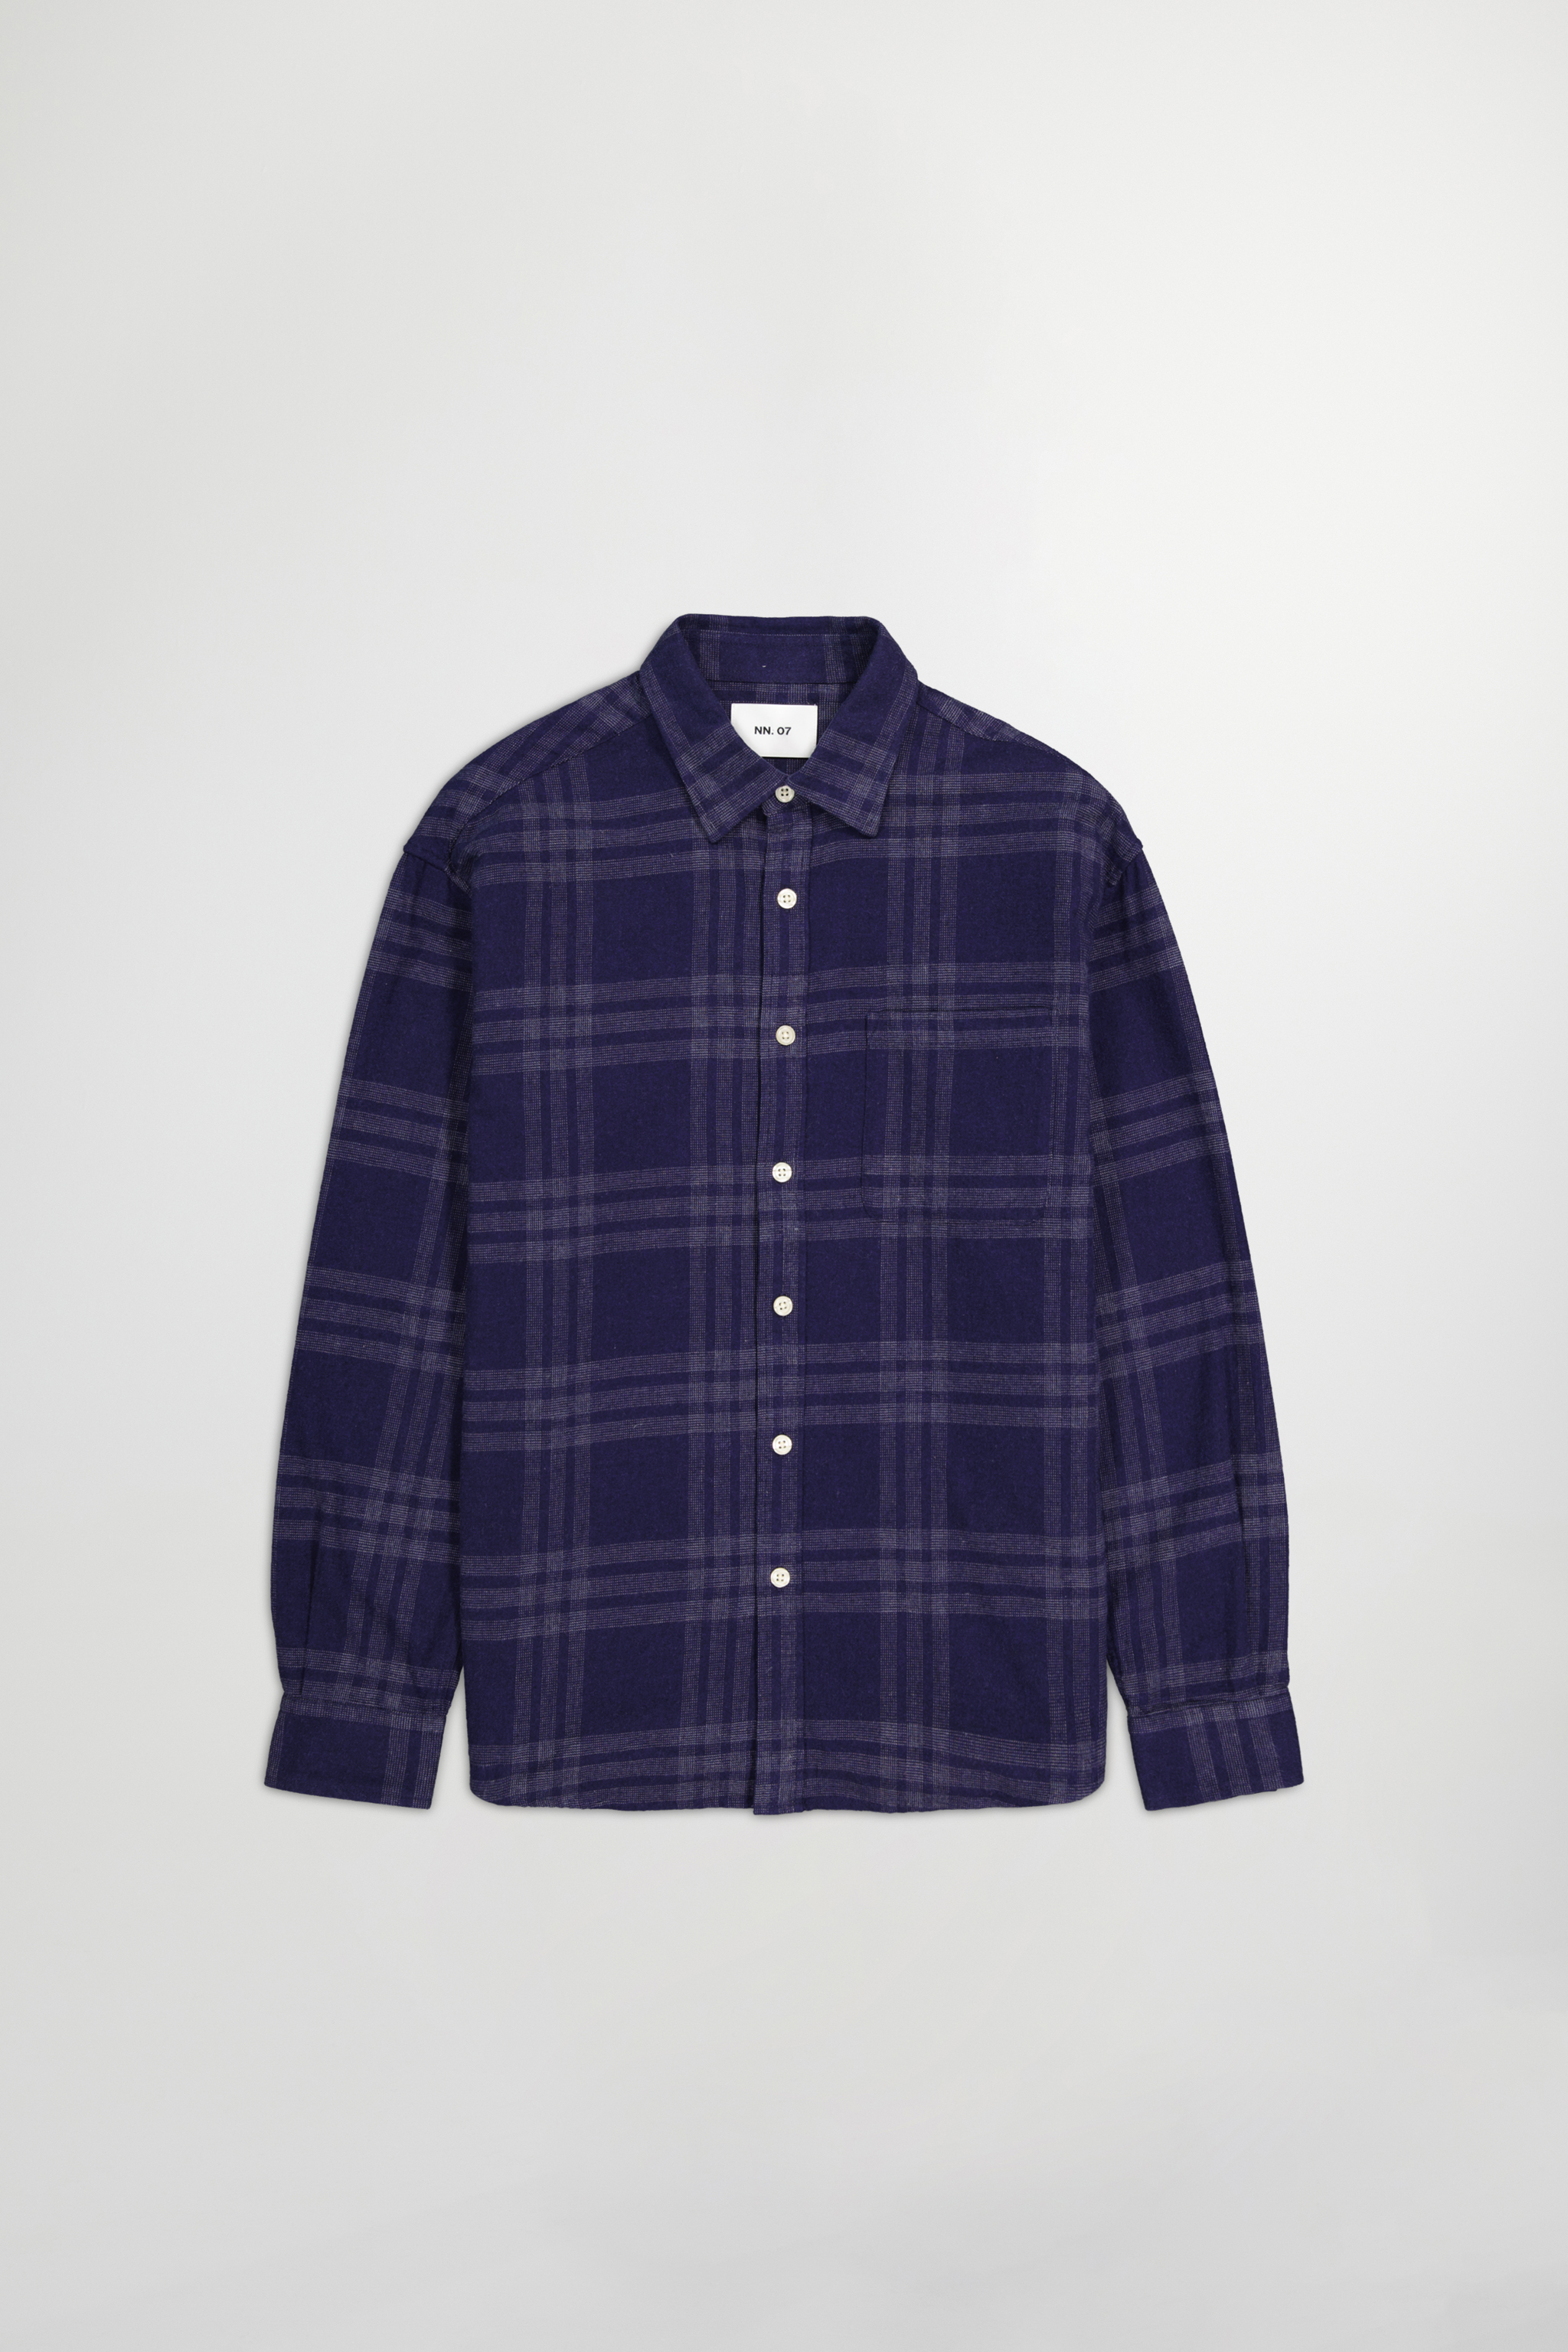 Deon 5465 men\'s shirt - Blue Check - Buy online at